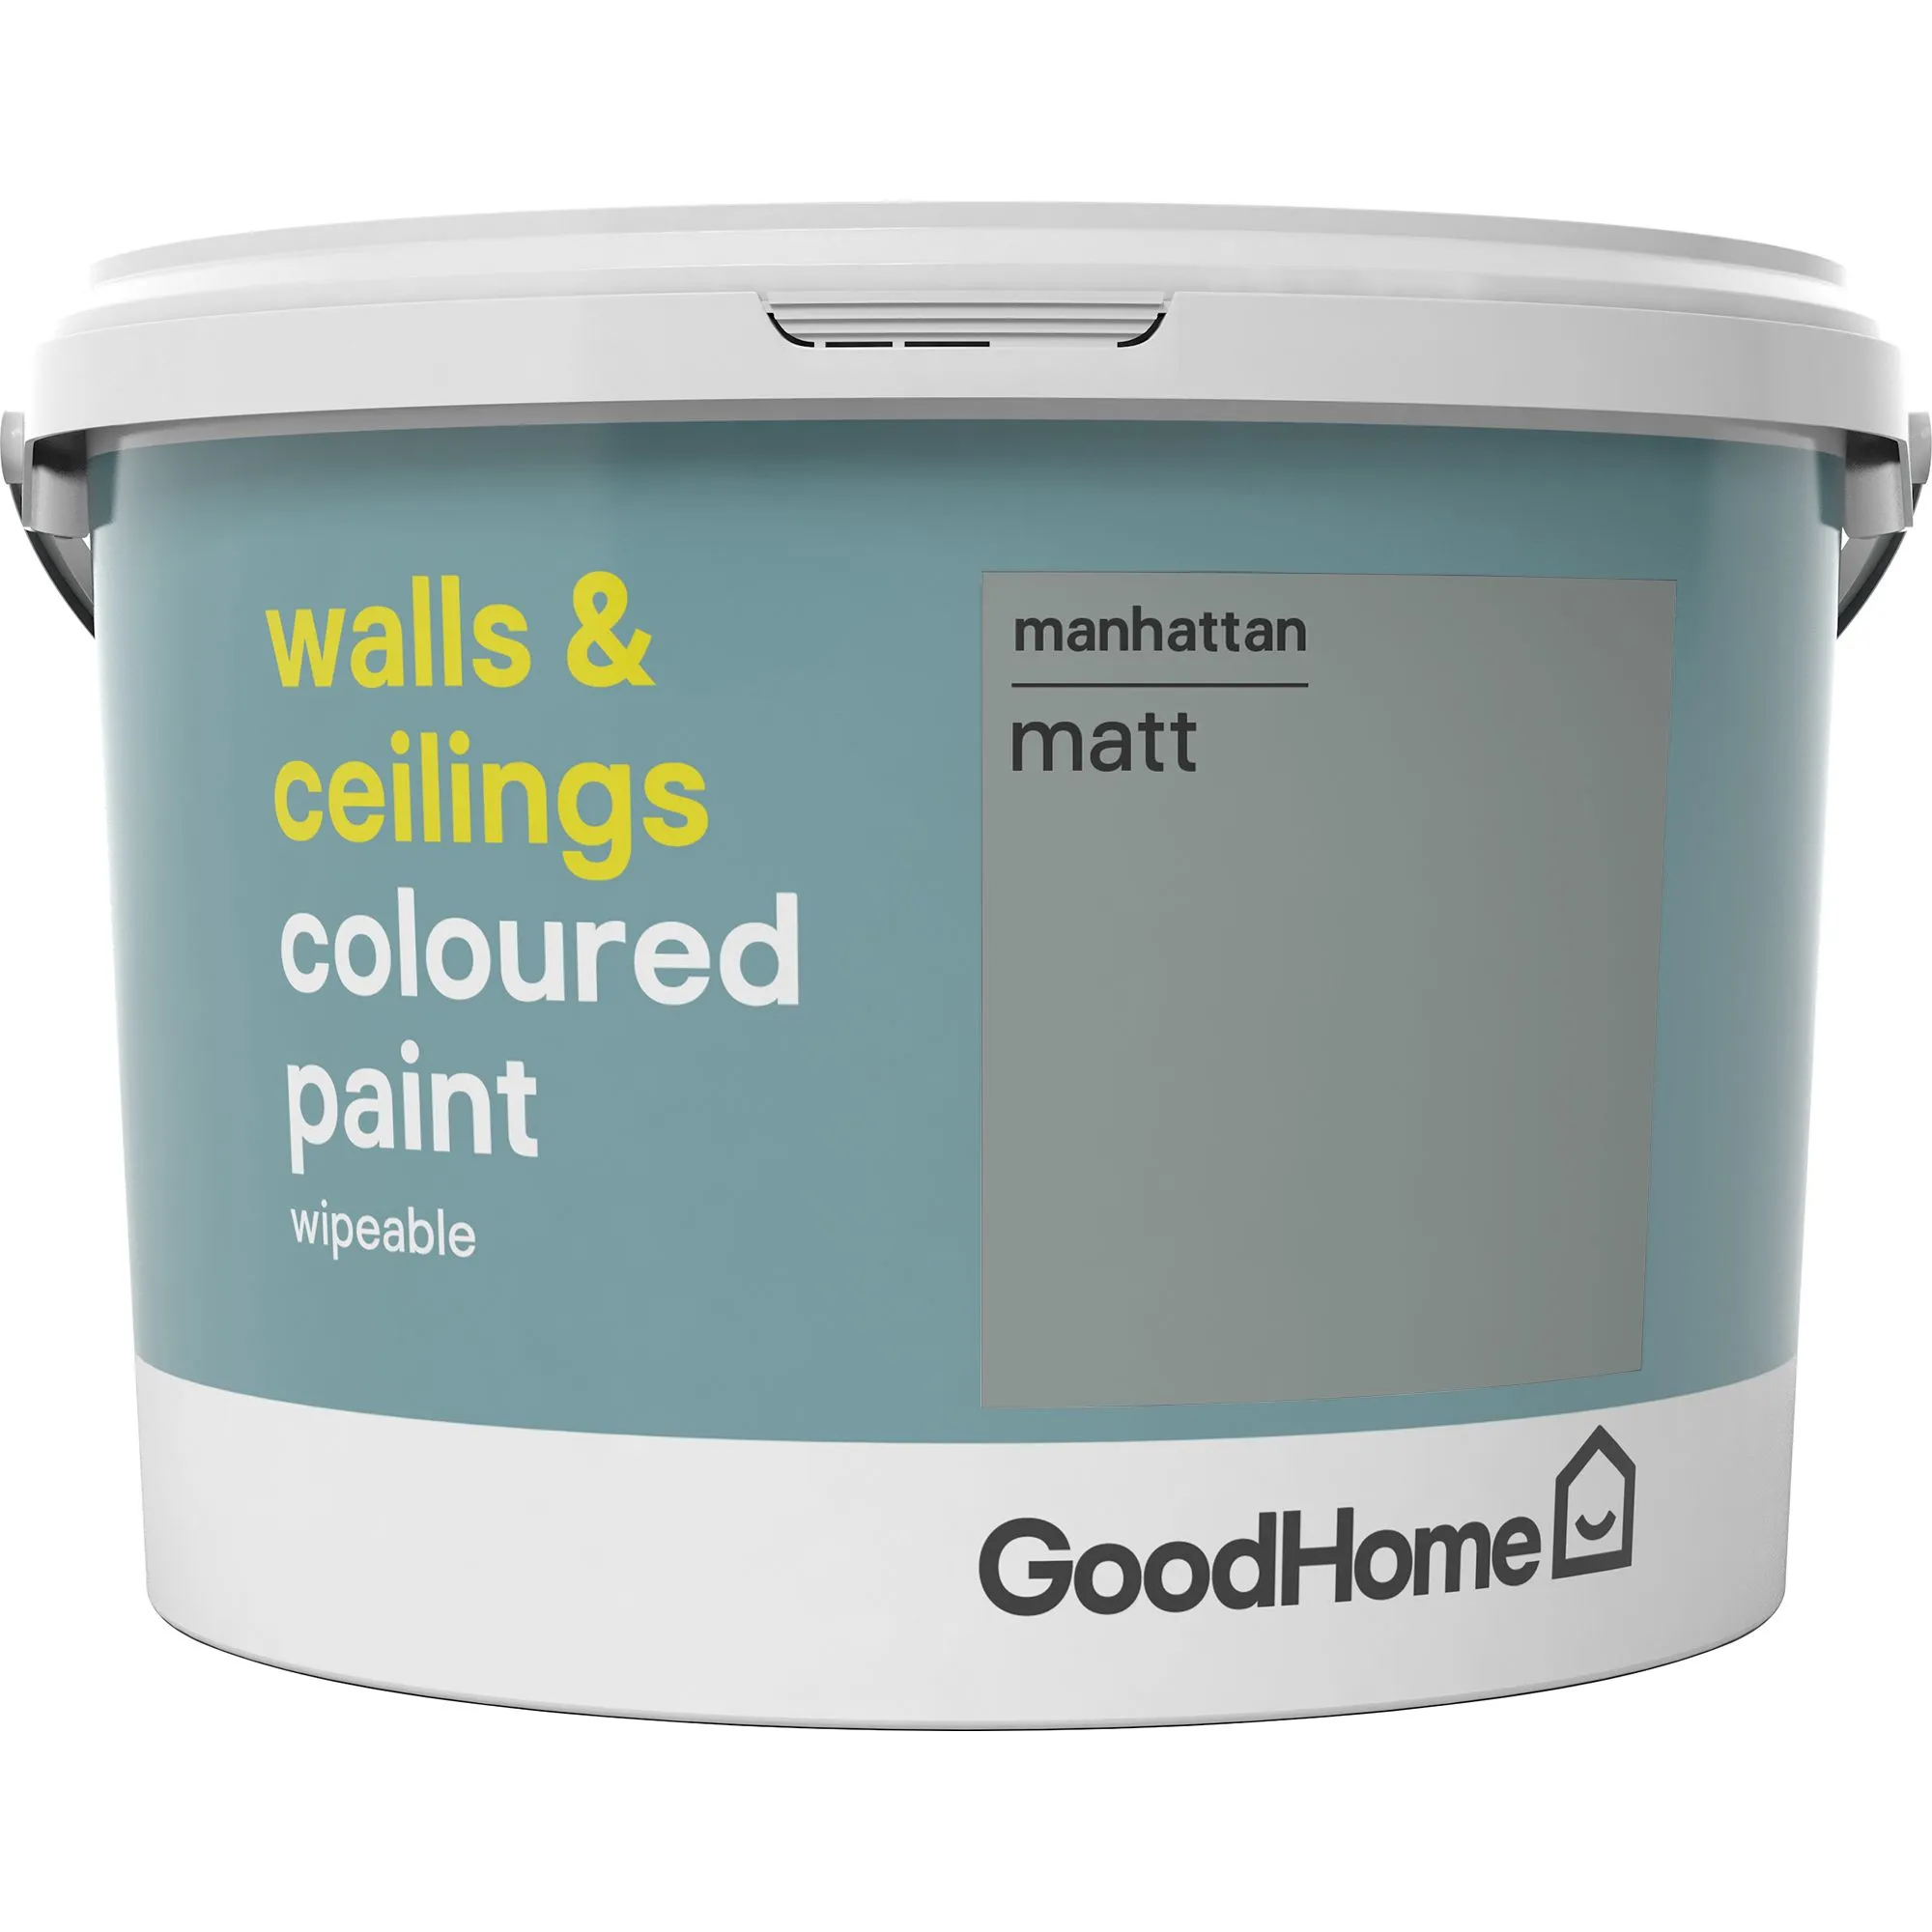 GoodHome Walls & ceilings Manhattan Matt Emulsion paint, 2.5L